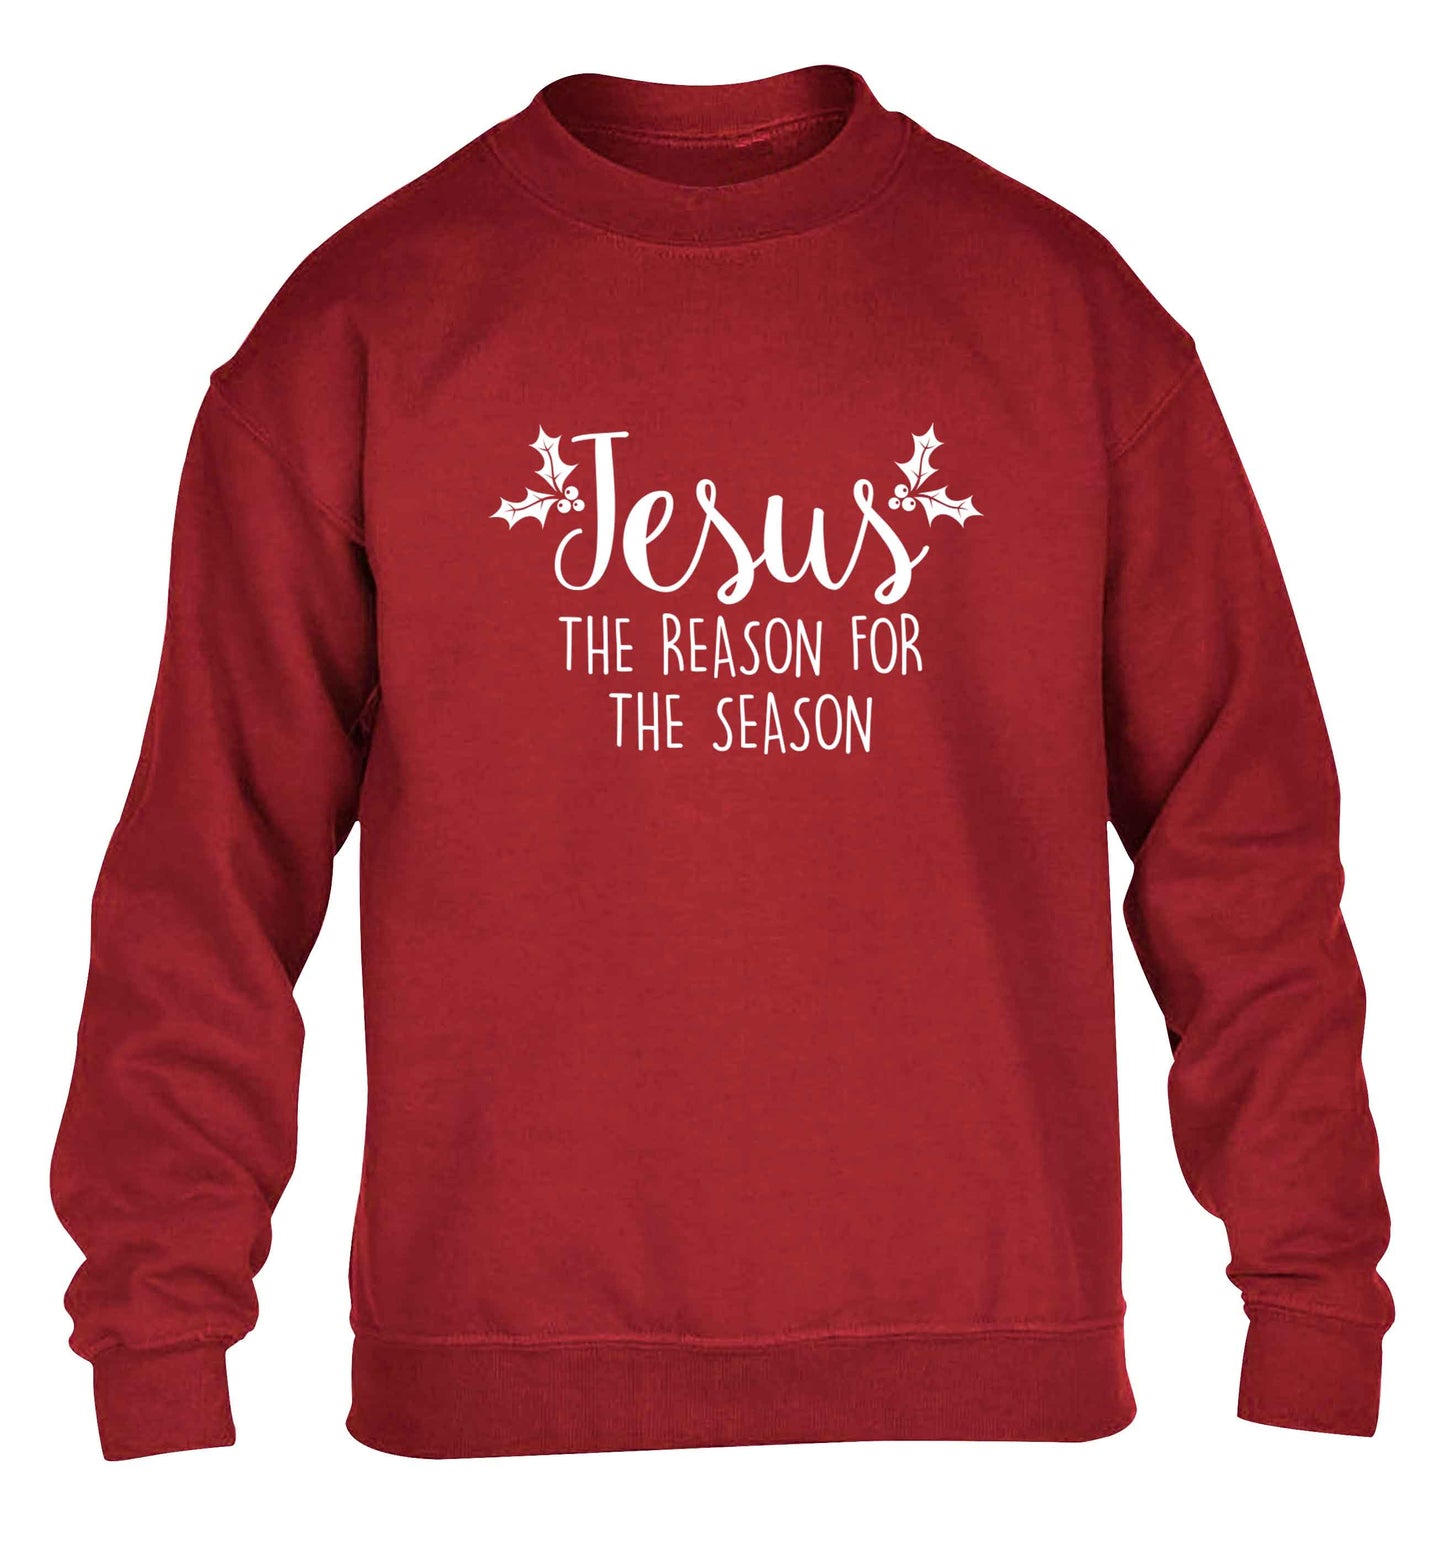 Jesus the reason for the season children's grey sweater 12-13 Years